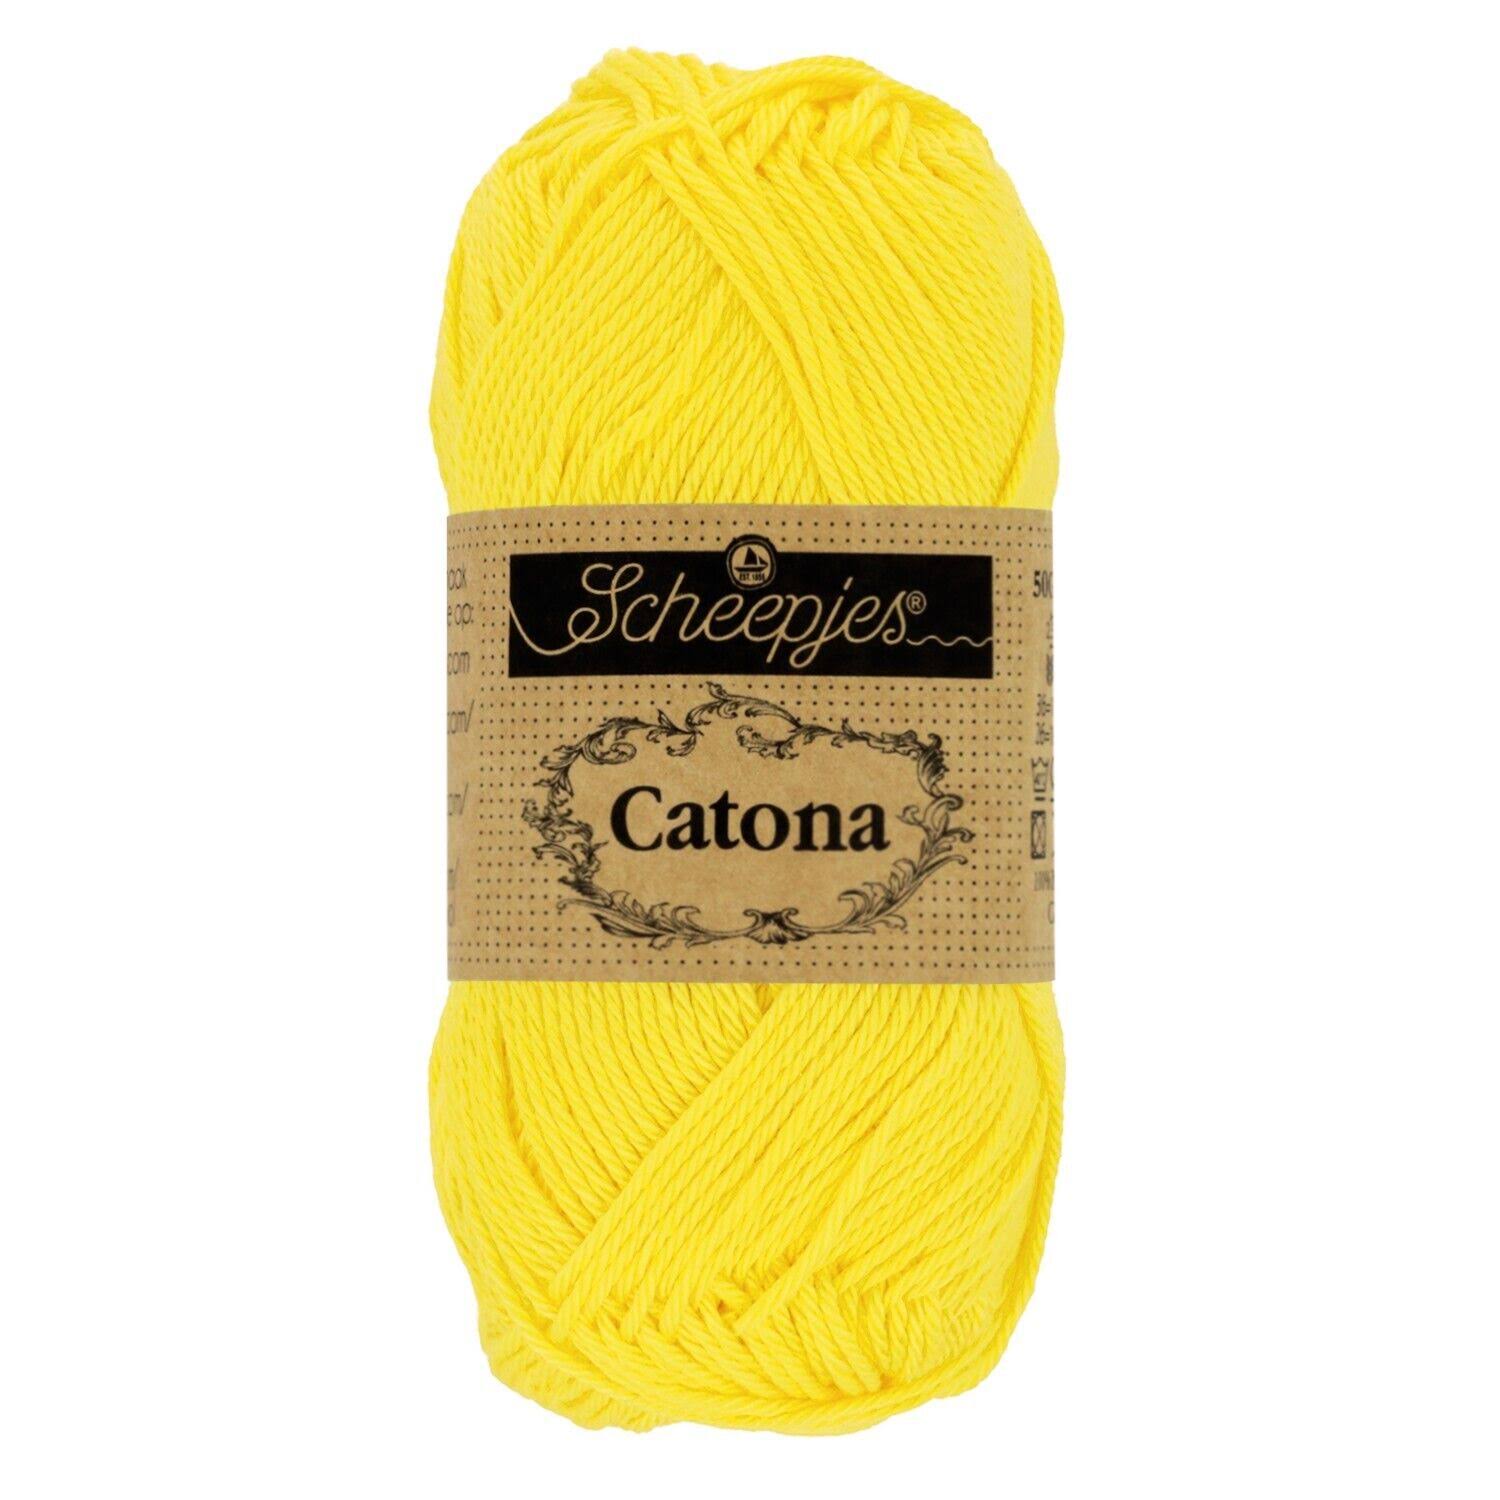 Scheepjes Catona 50g - 280 Lemon